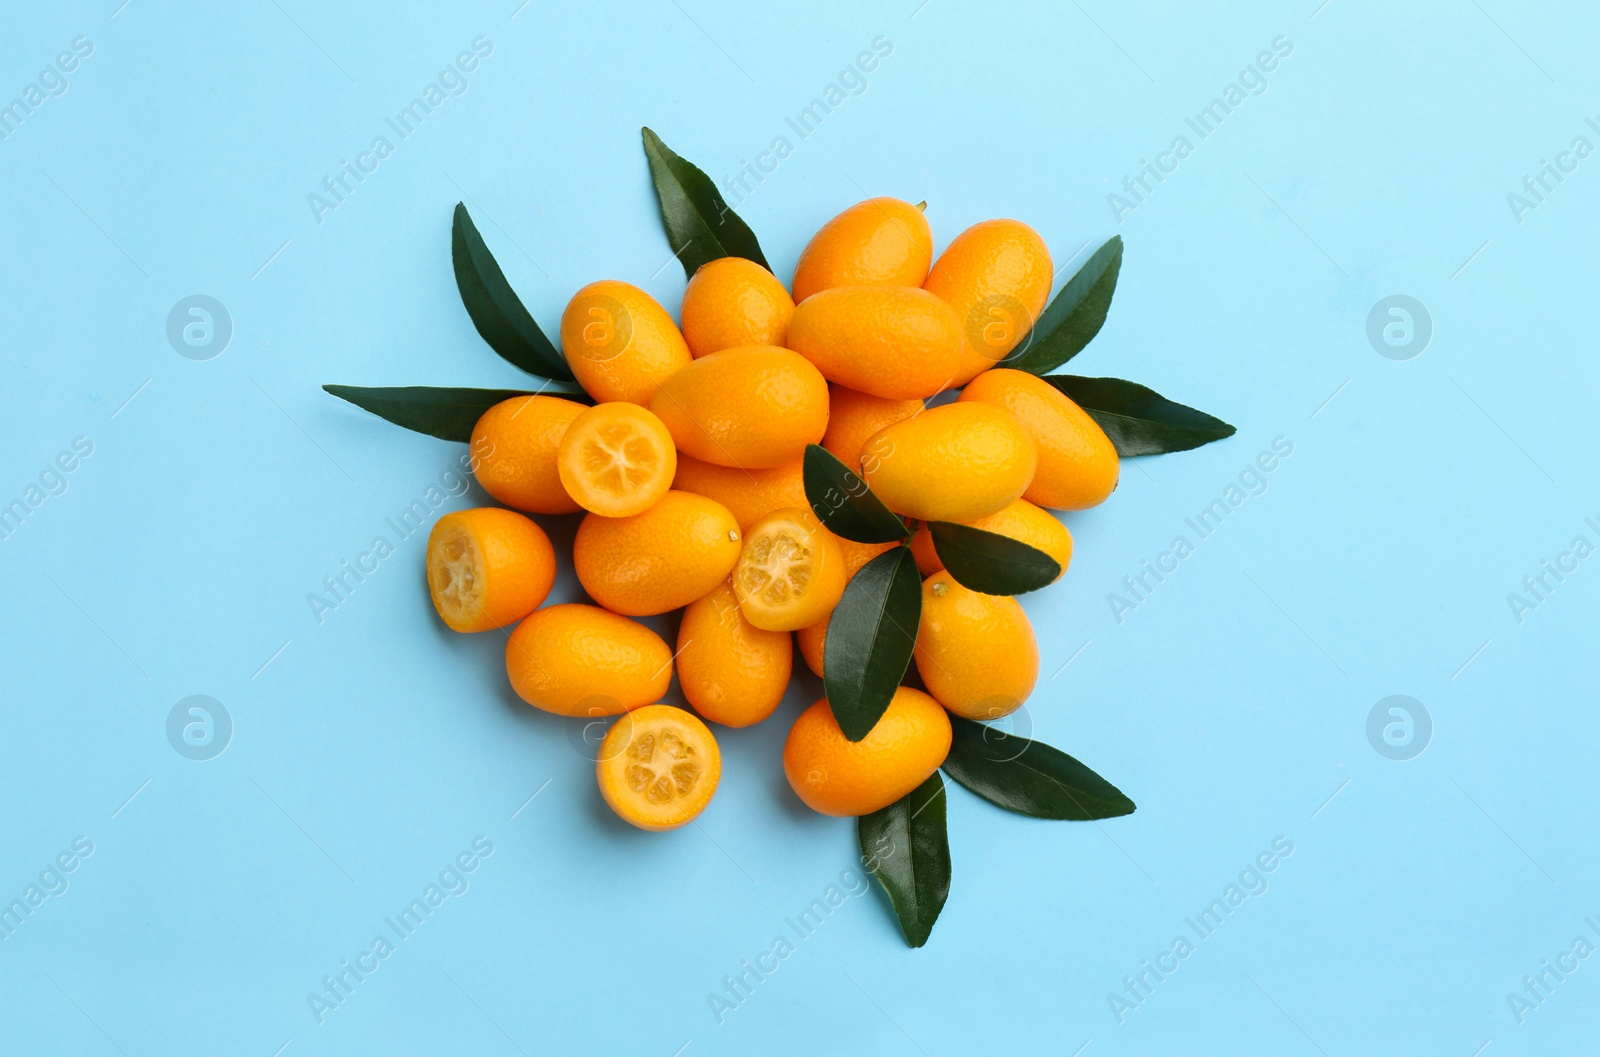 Photo of Fresh ripe kumquats with green leaves on light blue background, flat lay